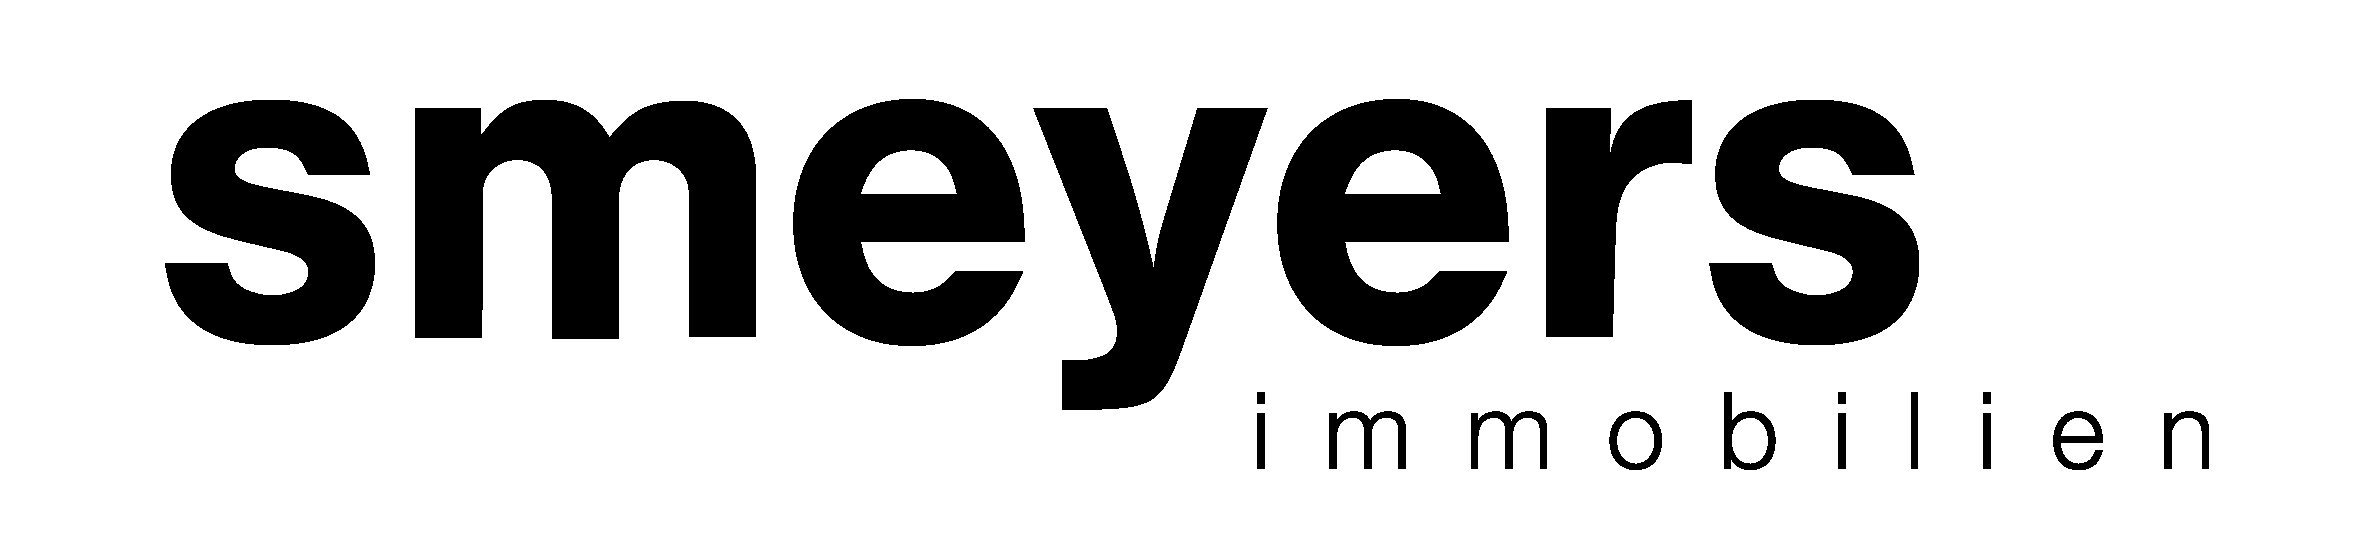 Logo meyers